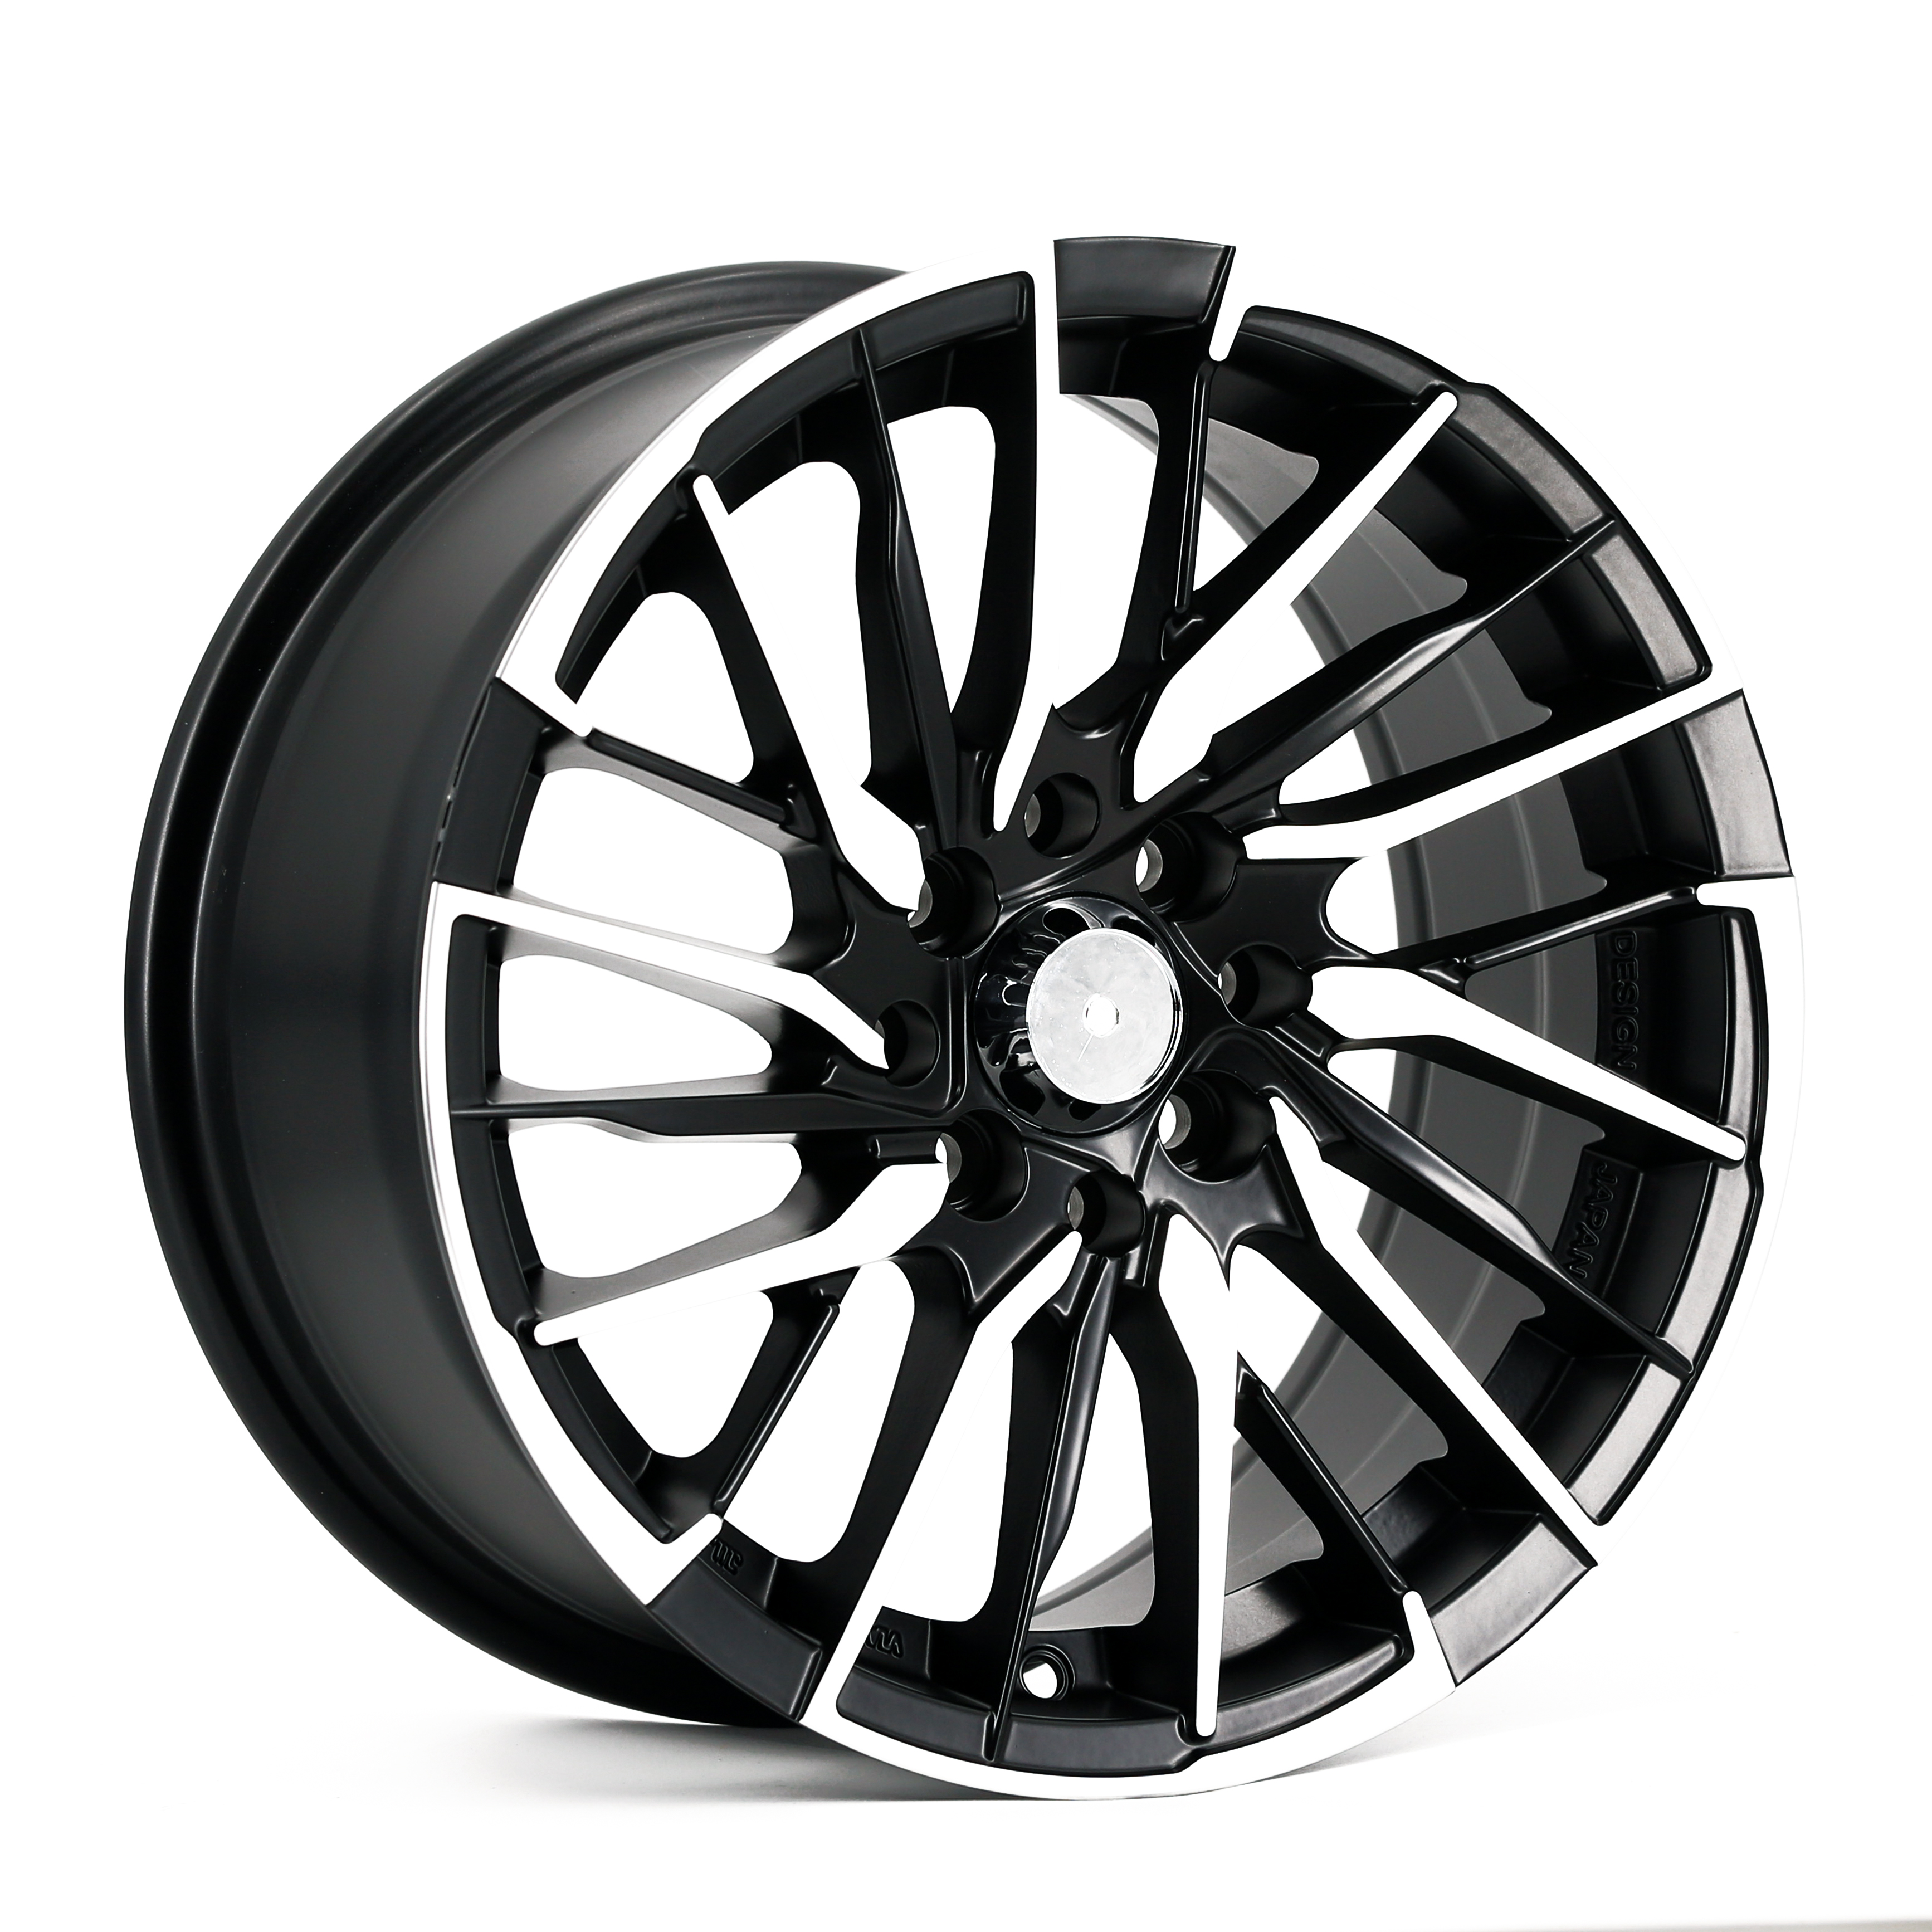 Car Alloy Wheels 15/17 Inch 5X114.3 Passenger Car Wheels